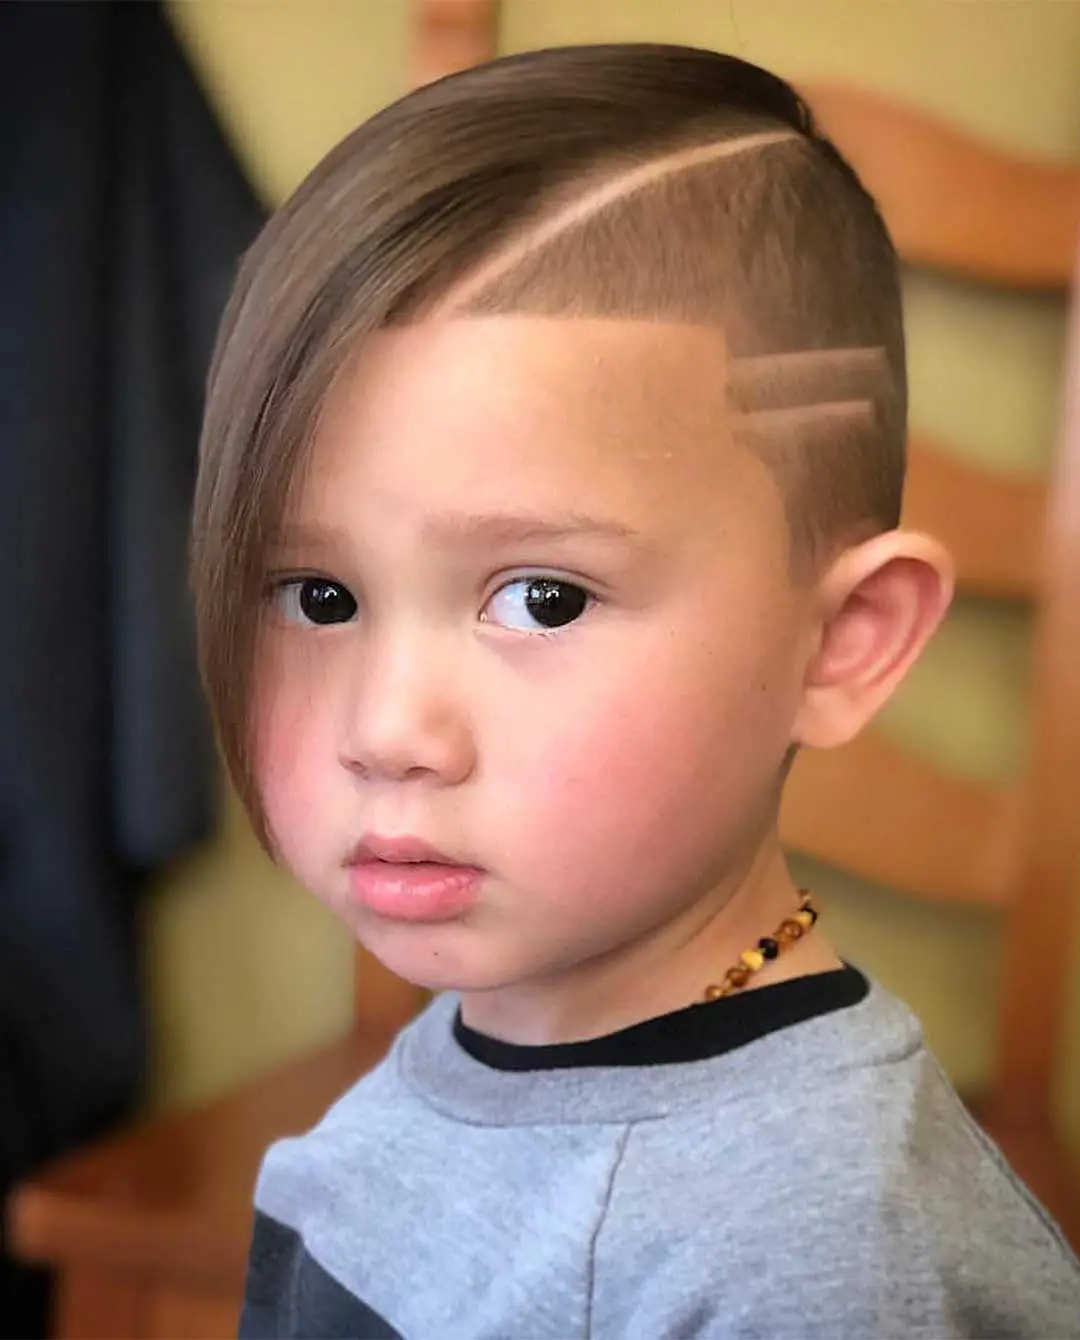 Kids Haircuts: +54 Little Boy Haircuts Your Kids will Love